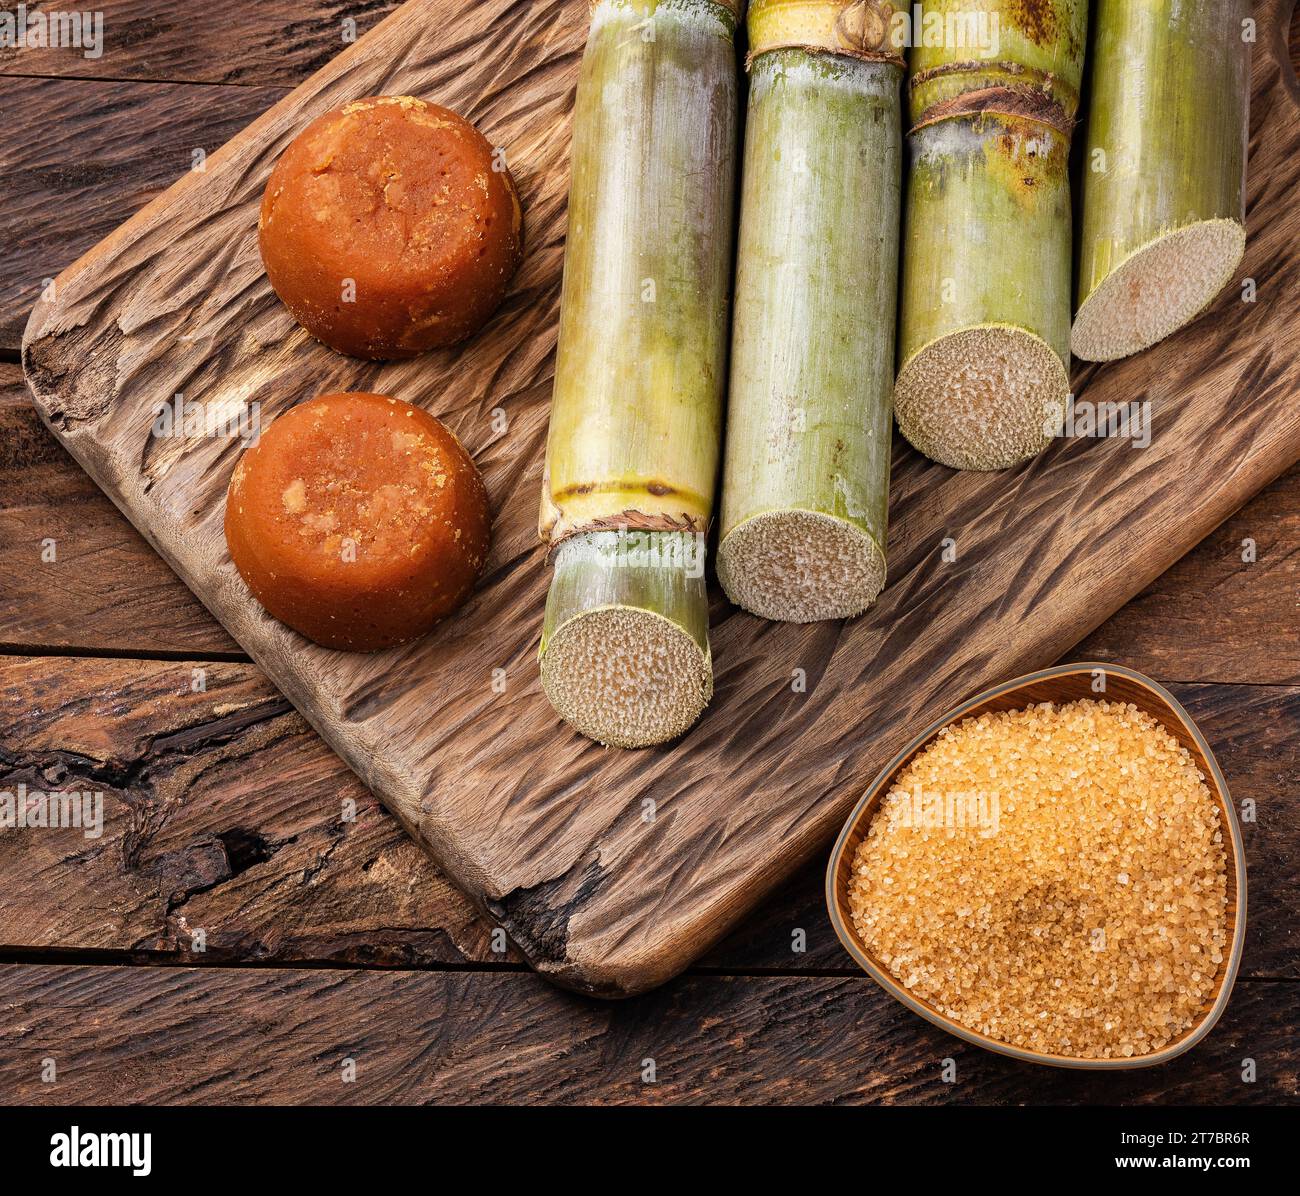 Saccharum officinarum - Panela and brown sugar with sugar cane stalks Stock Photo